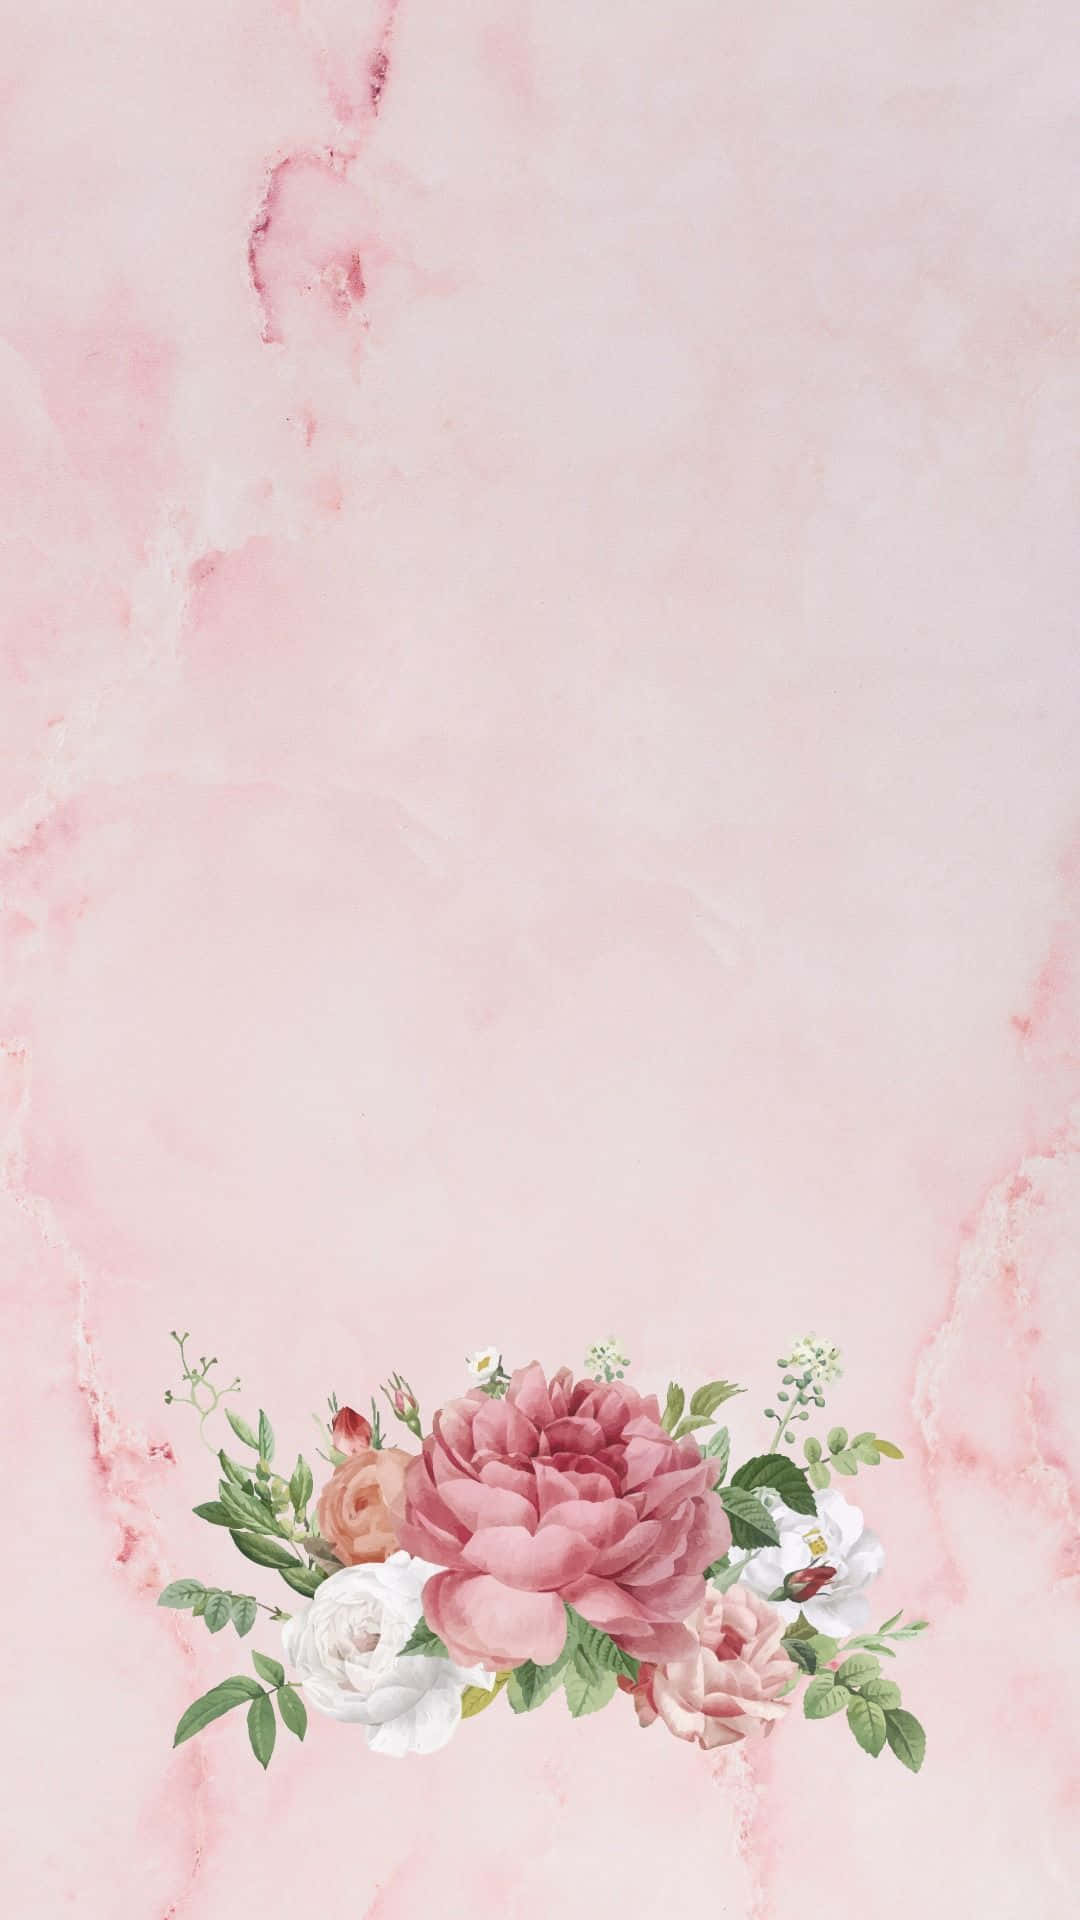 Free iPhone Wallpapers  Stars  PinkWhite Aesthetic  Becca Jayne 